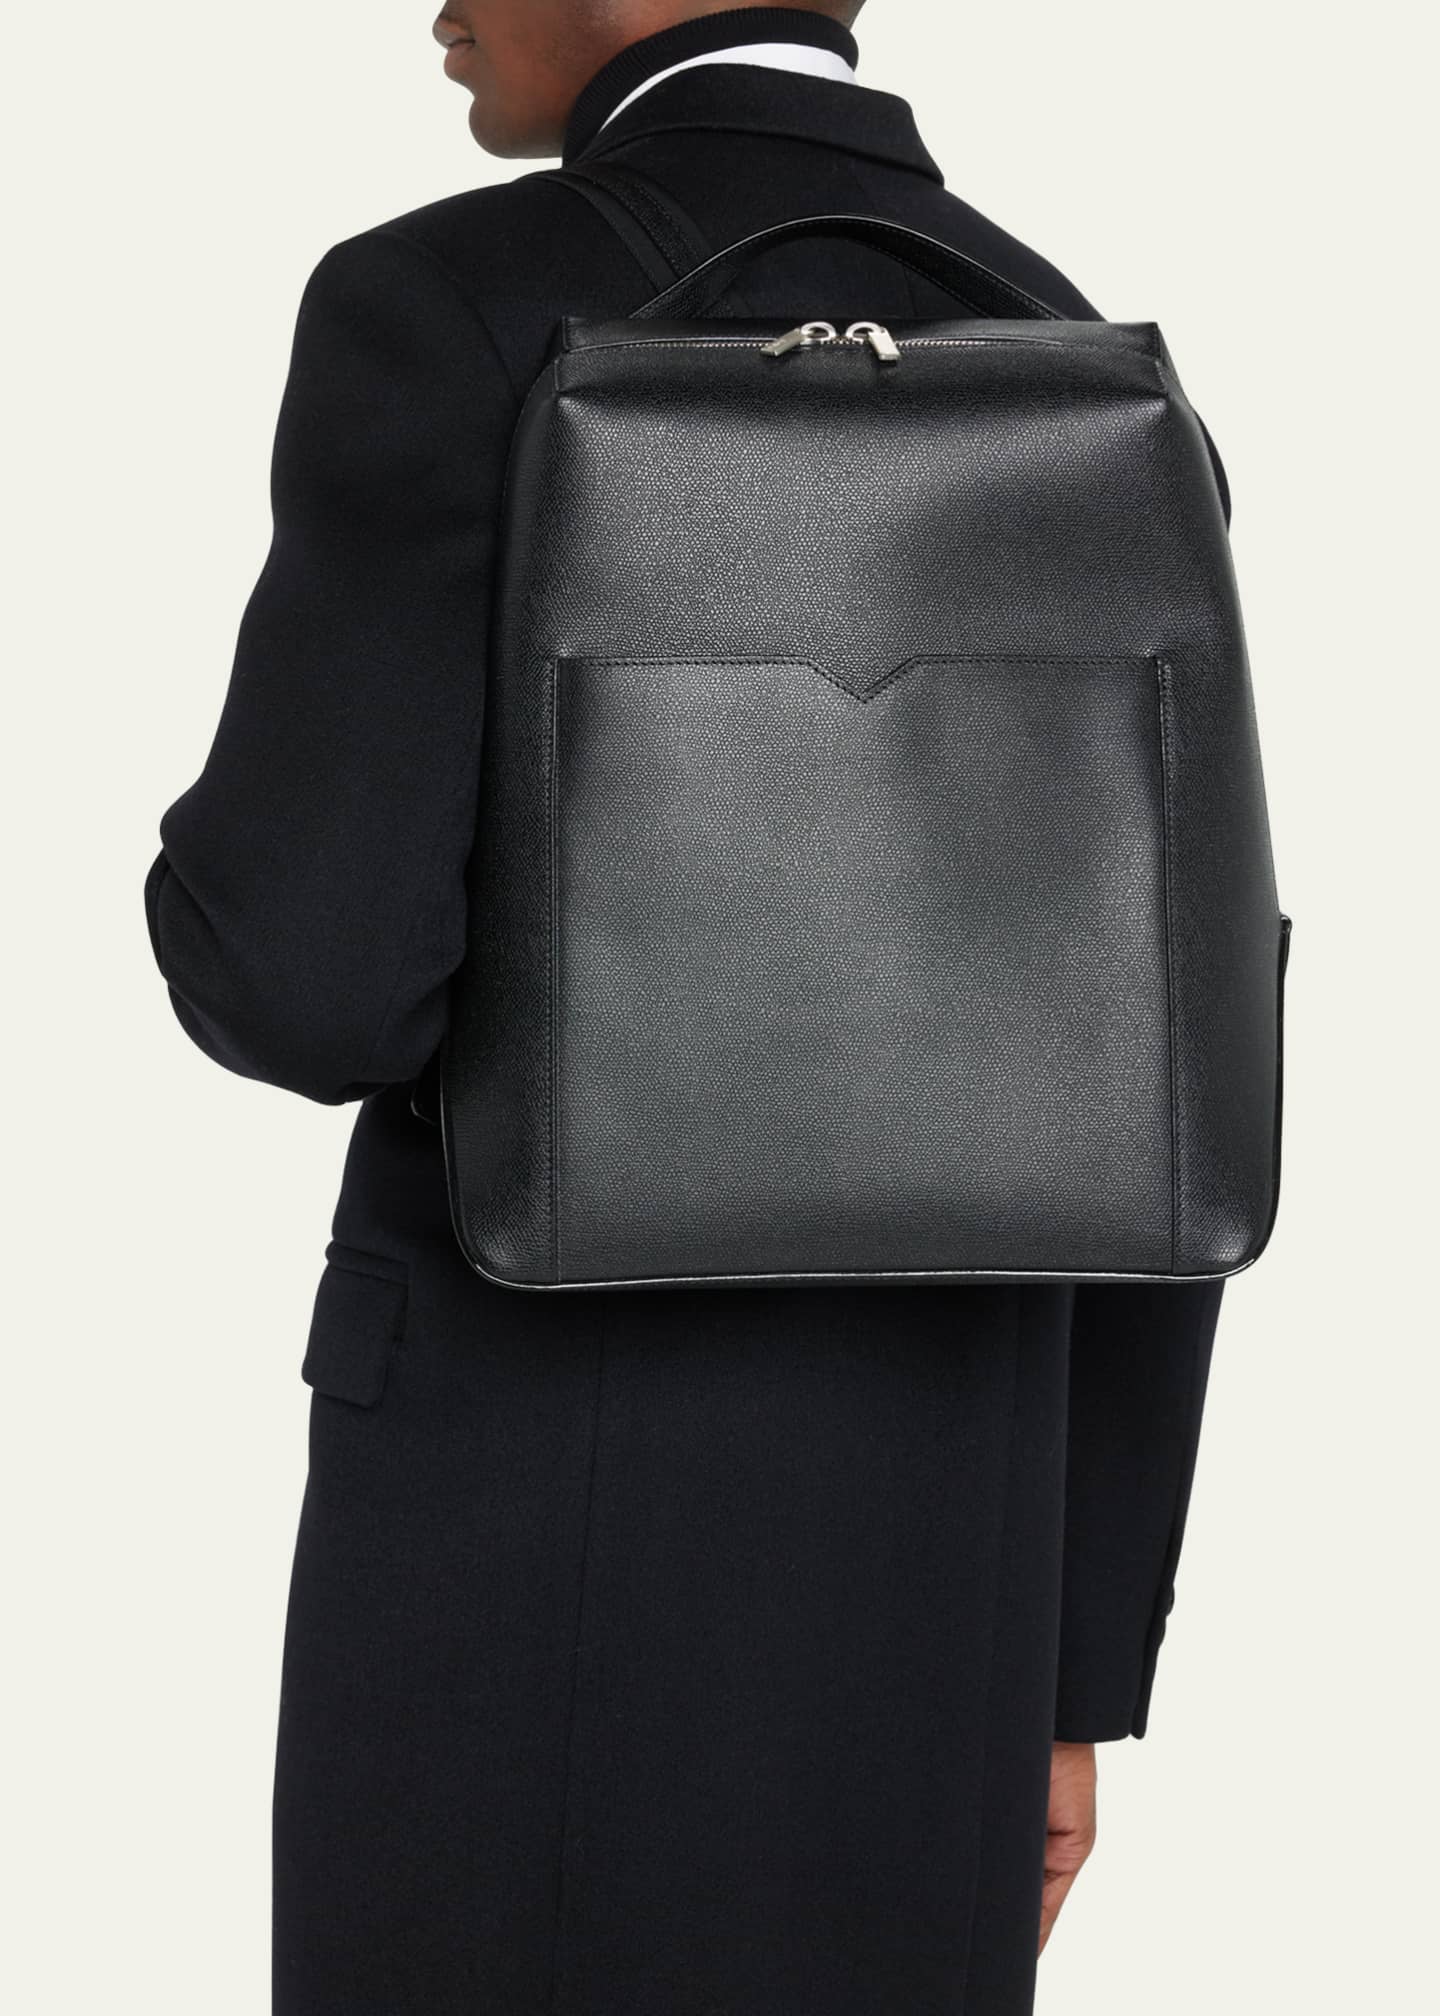 Valextra Men's V-Compact V-Line Pebble Leather Backpack - Bergdorf Goodman